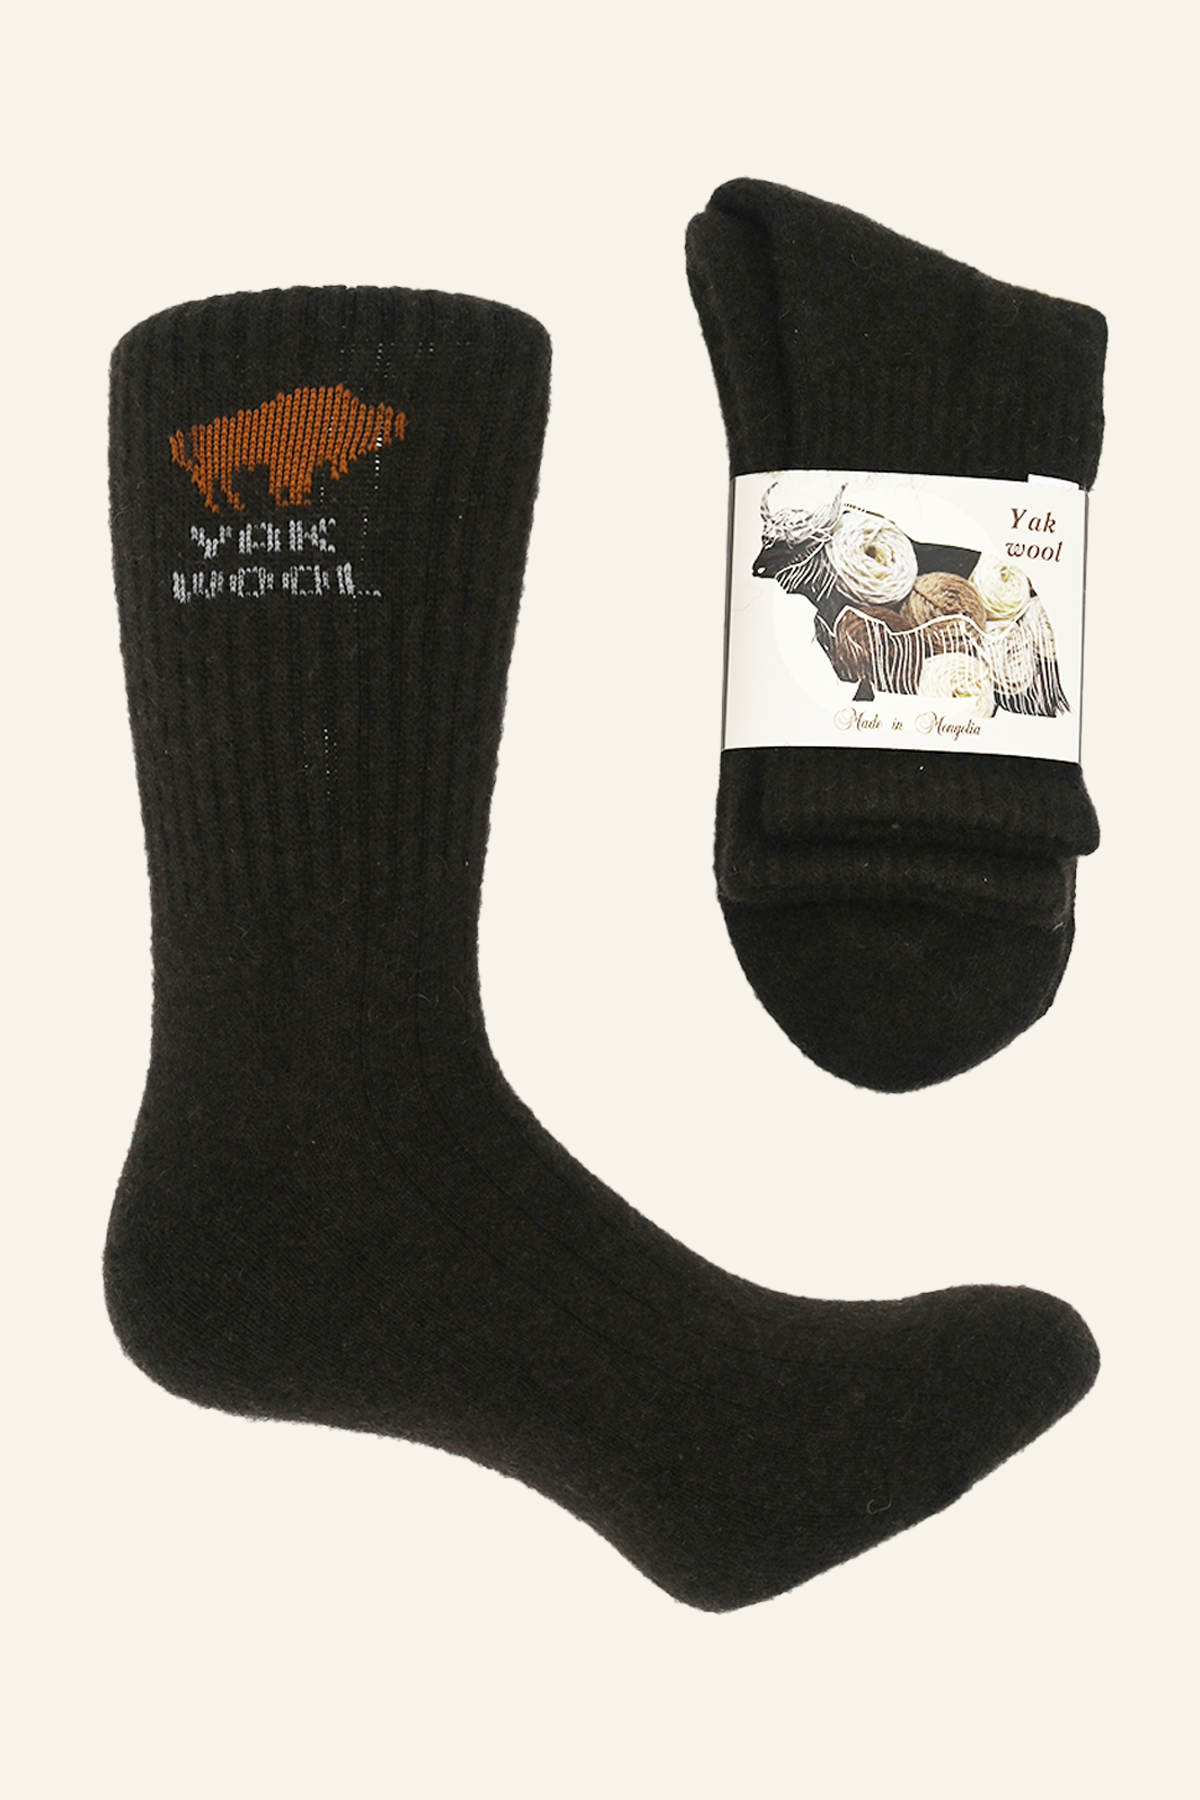 Yak Wool Socks